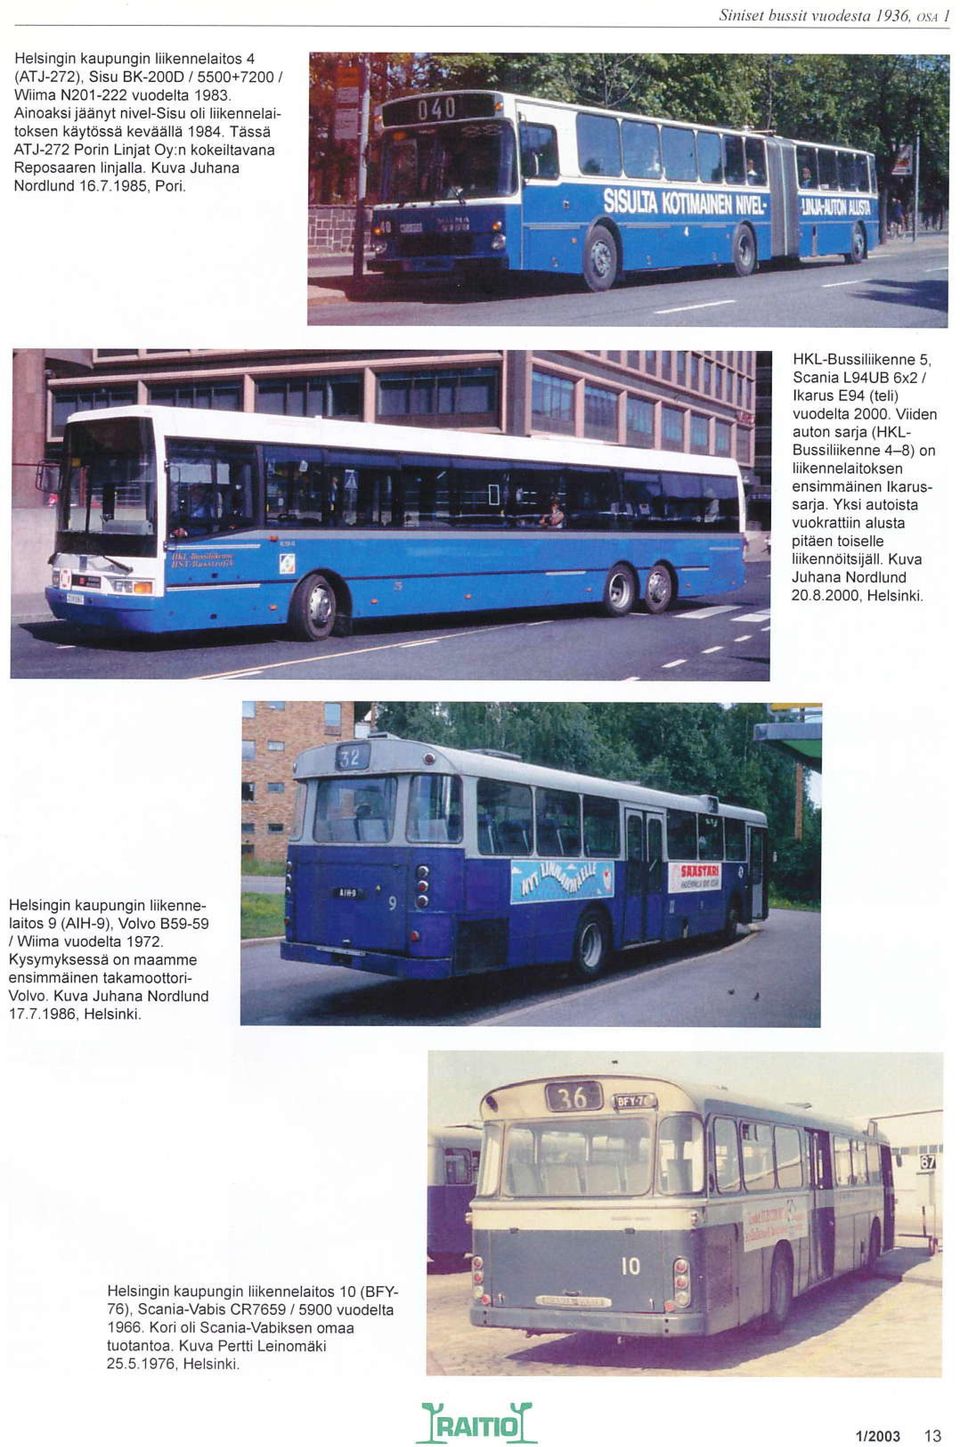 HKL Bussiliikenne 5, Scania L94UB 6x2 / lkan's E94 (teli) vuodelh 2000. Viiden liikenn0ifljåll. Kuva 20.8.2000. Helsinki.